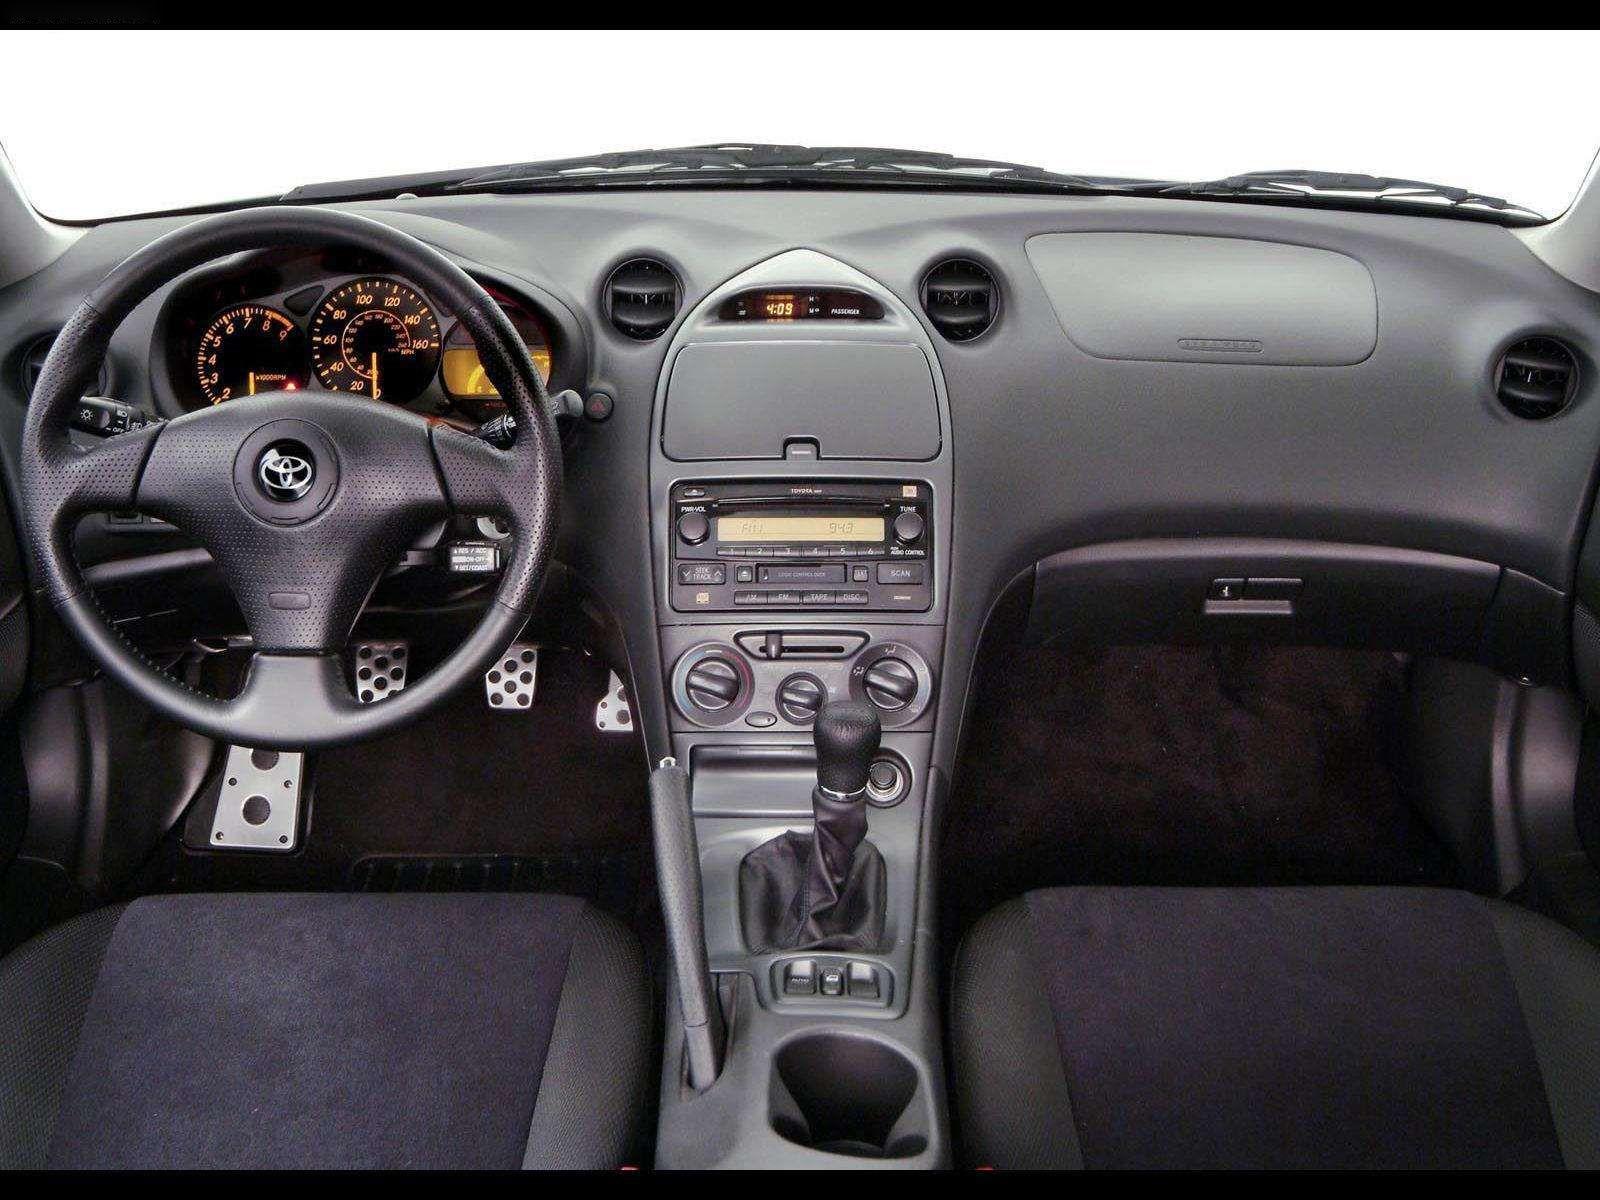 Cool Picture. Toyota Celica HD Widescreen Wallpaper